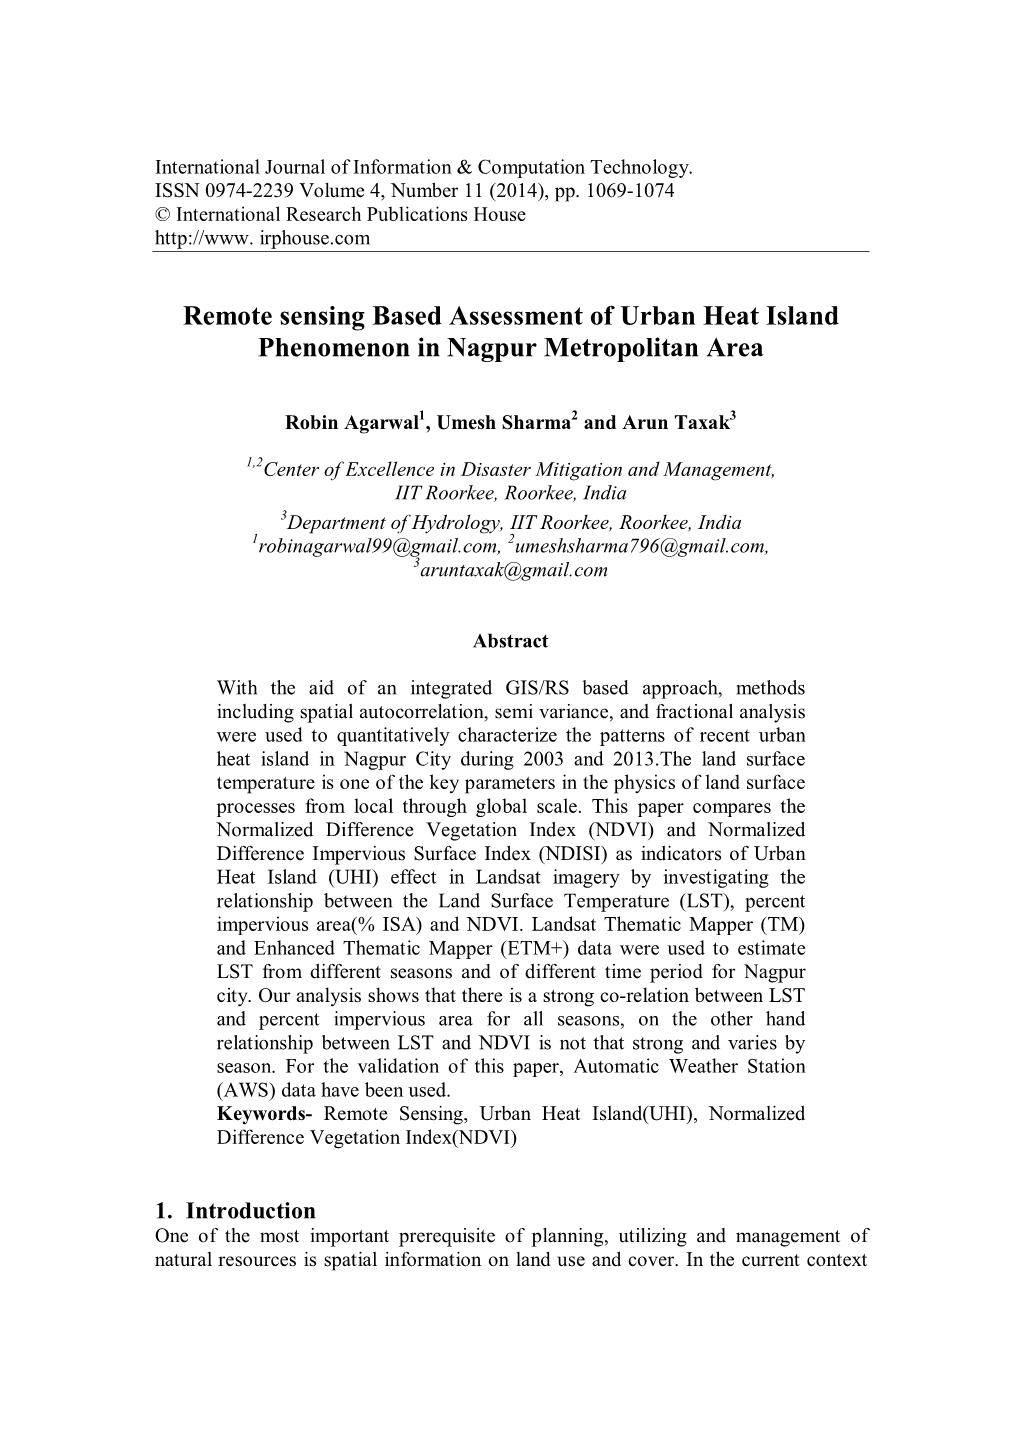 Remote Sensing Based Assessment of Urban Heat Island Phenomenon in Nagpur Metropolitan Area